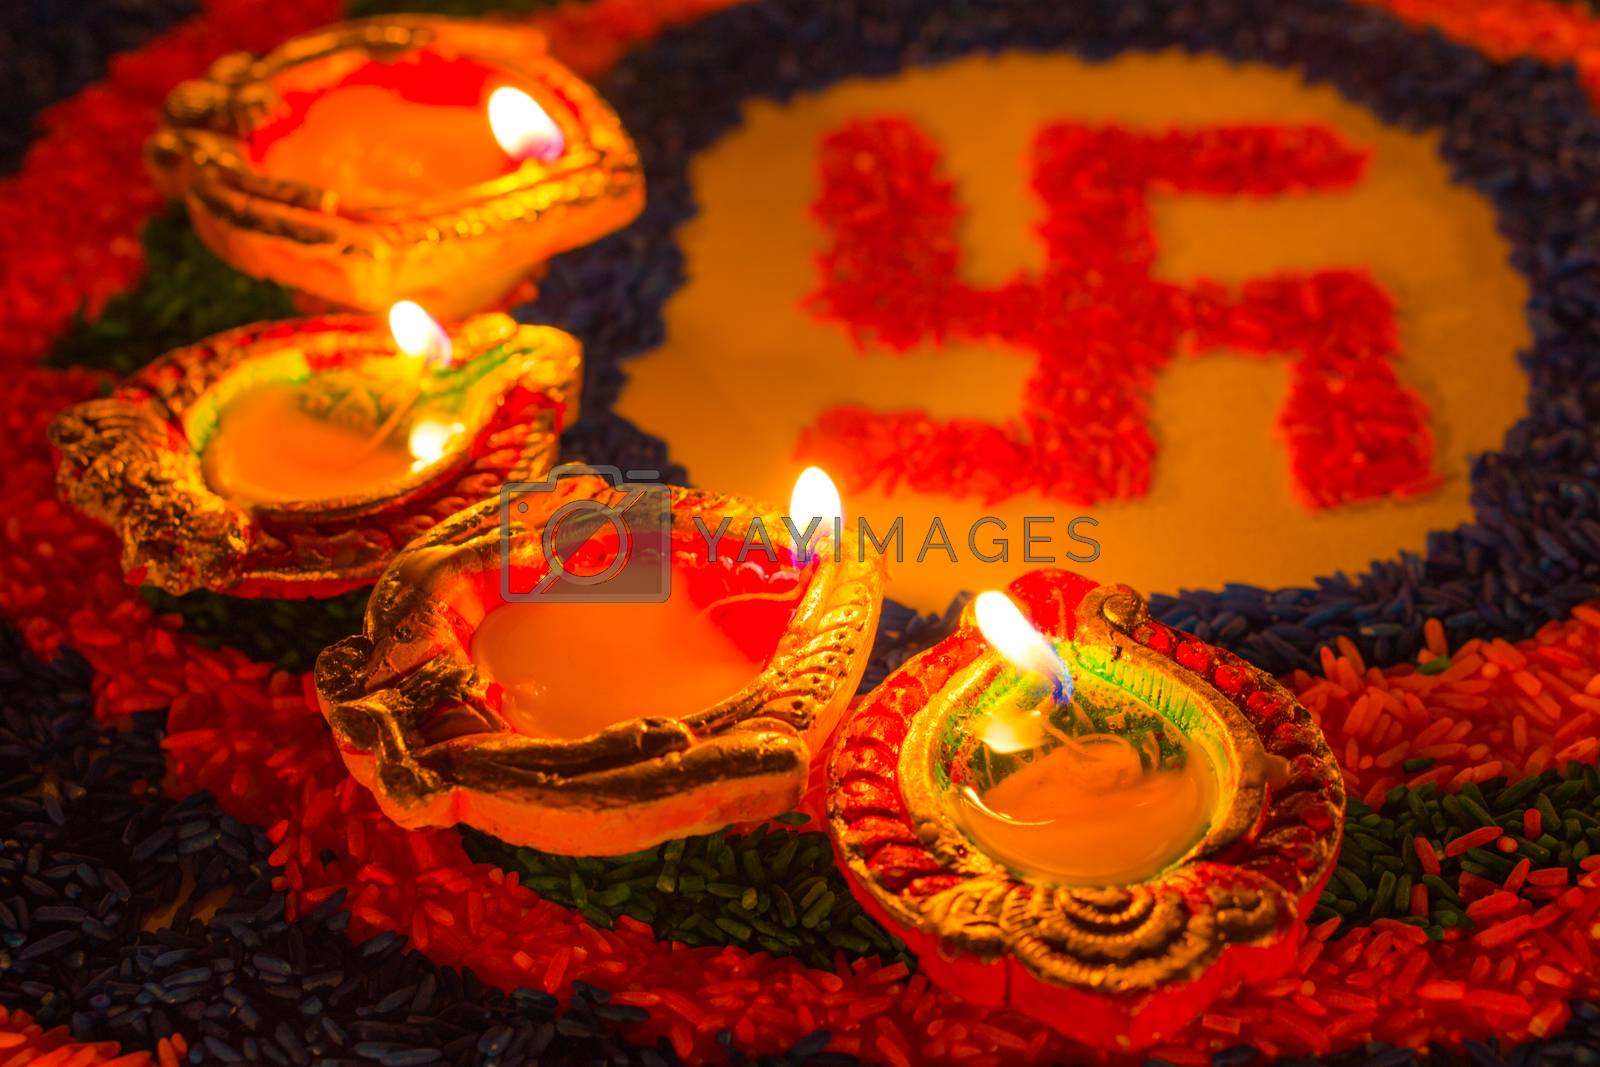 Royalty free image of Indian festival Diwali, Diya oil lamps lit on colorful rangoli w by mikesaran